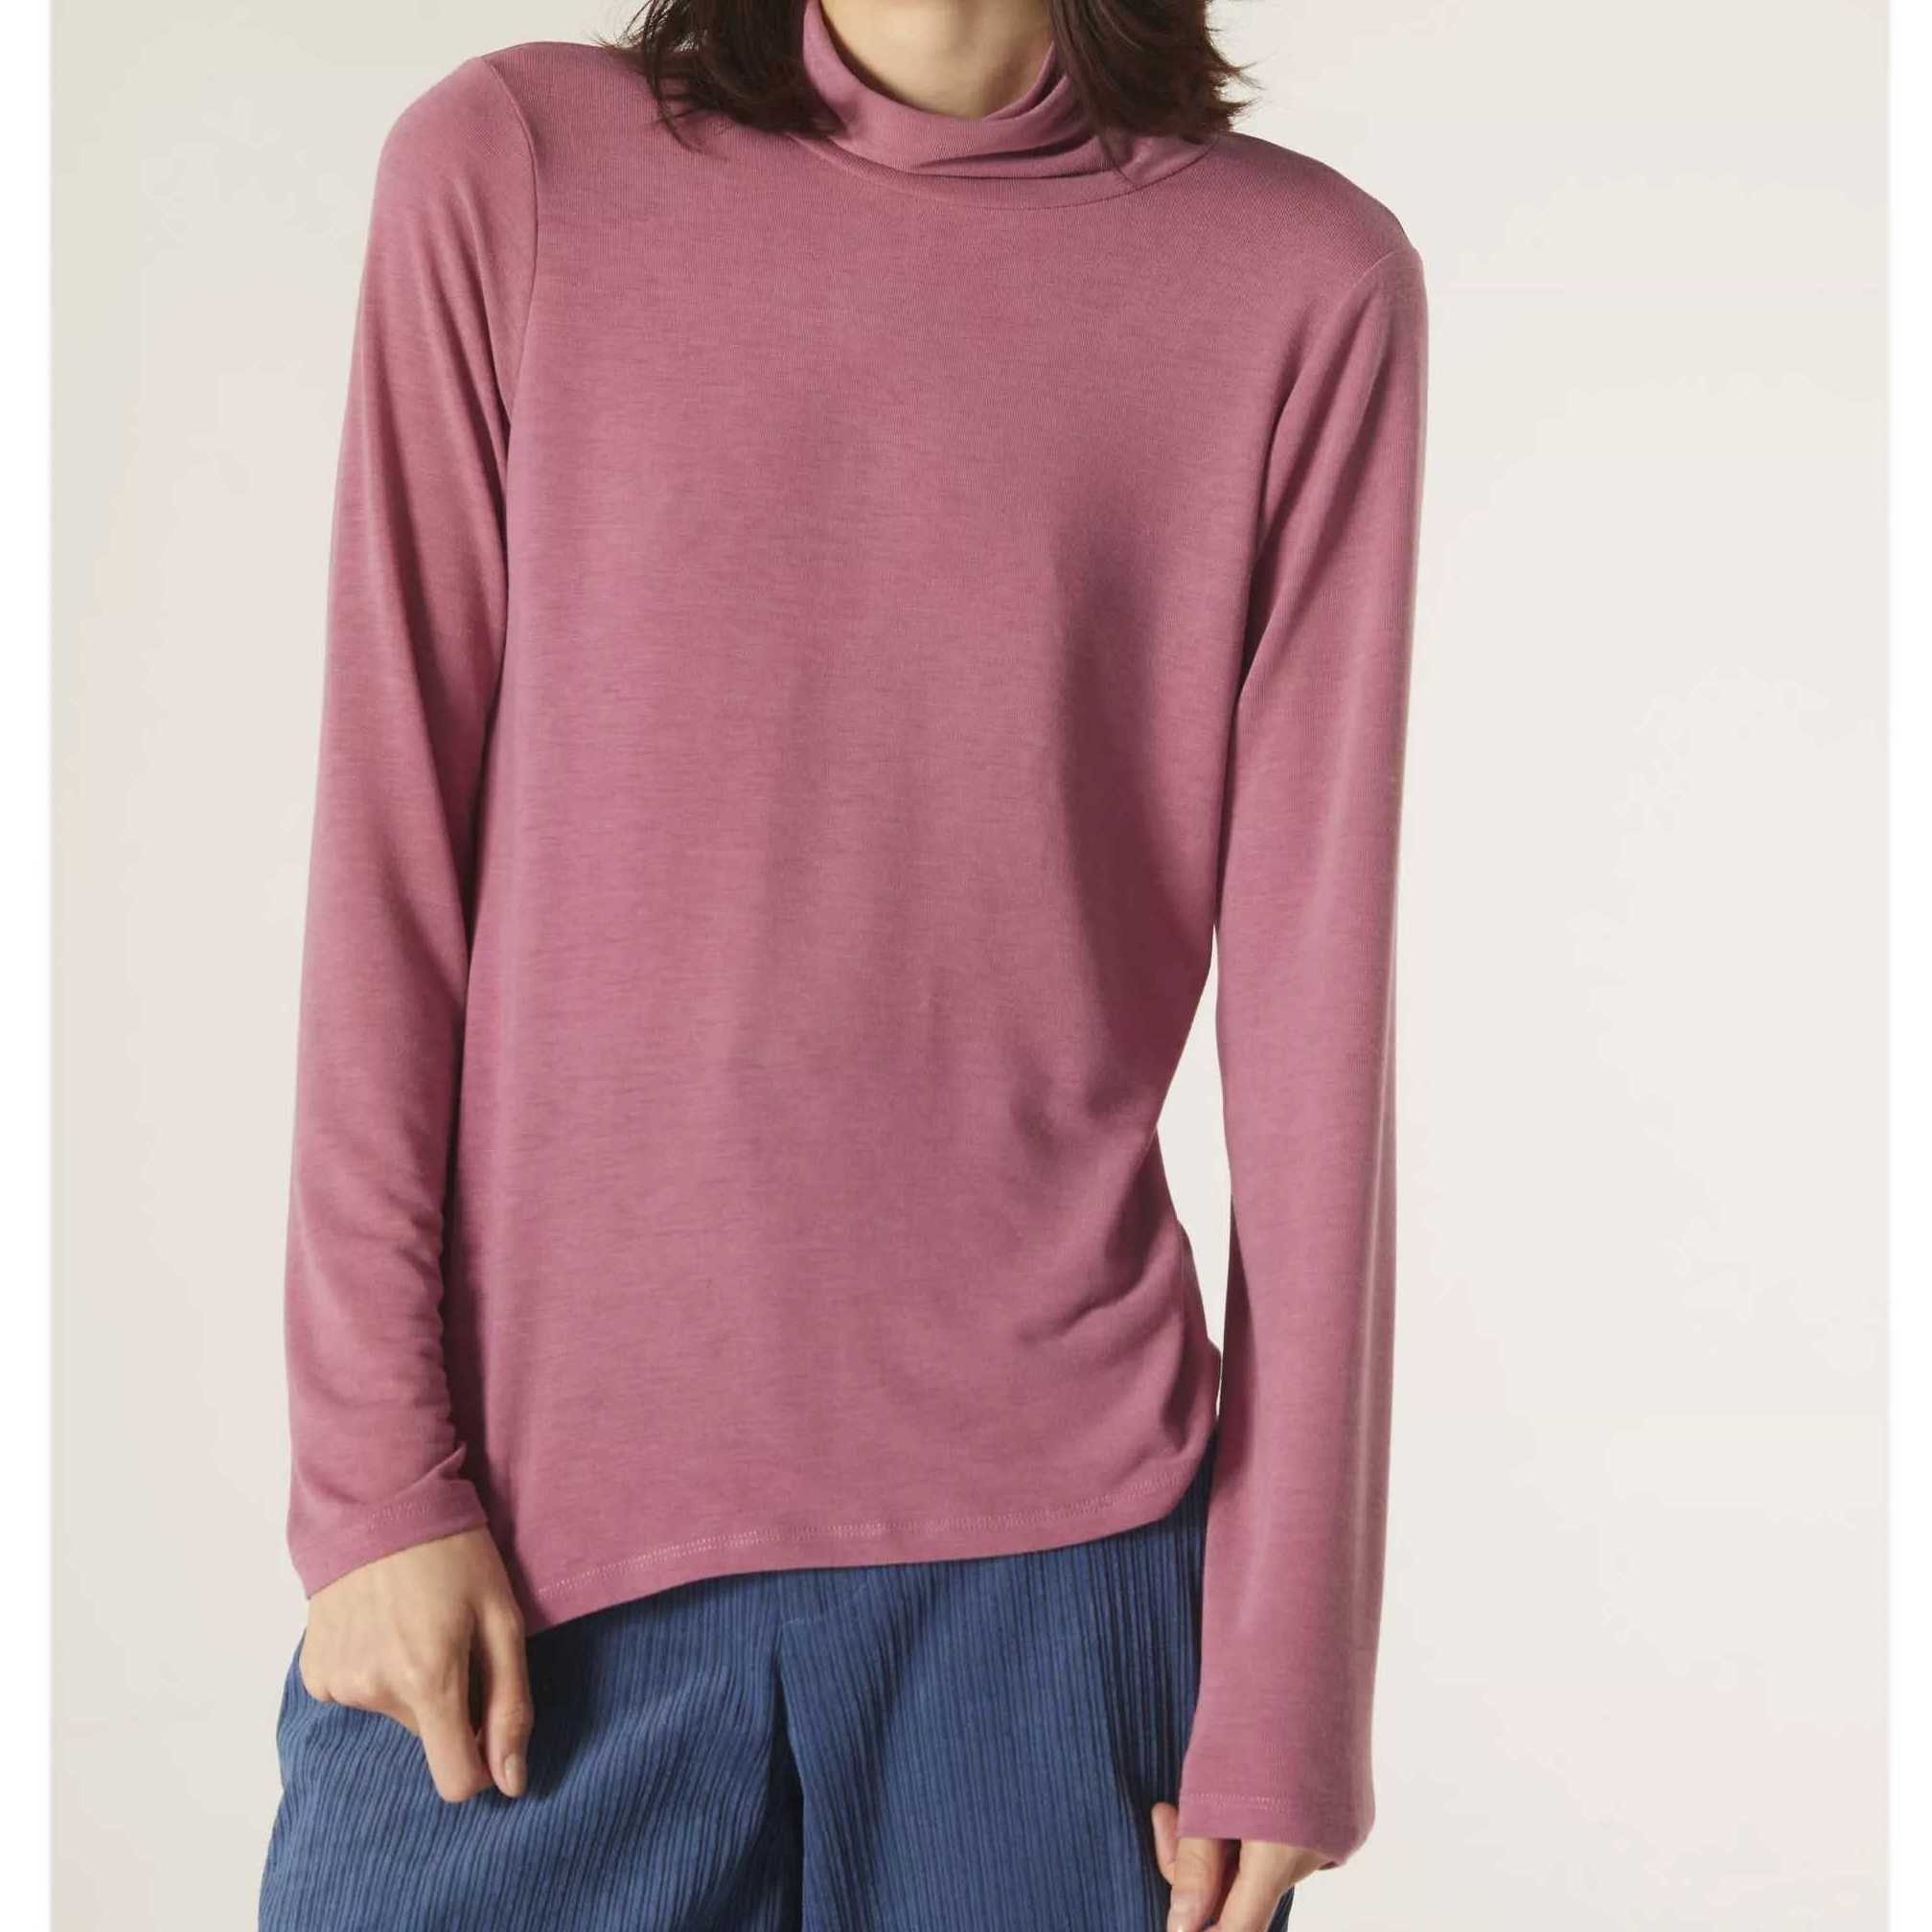 Camiseta Compañia Elástica, Cuello Alto Manga Larga Pink